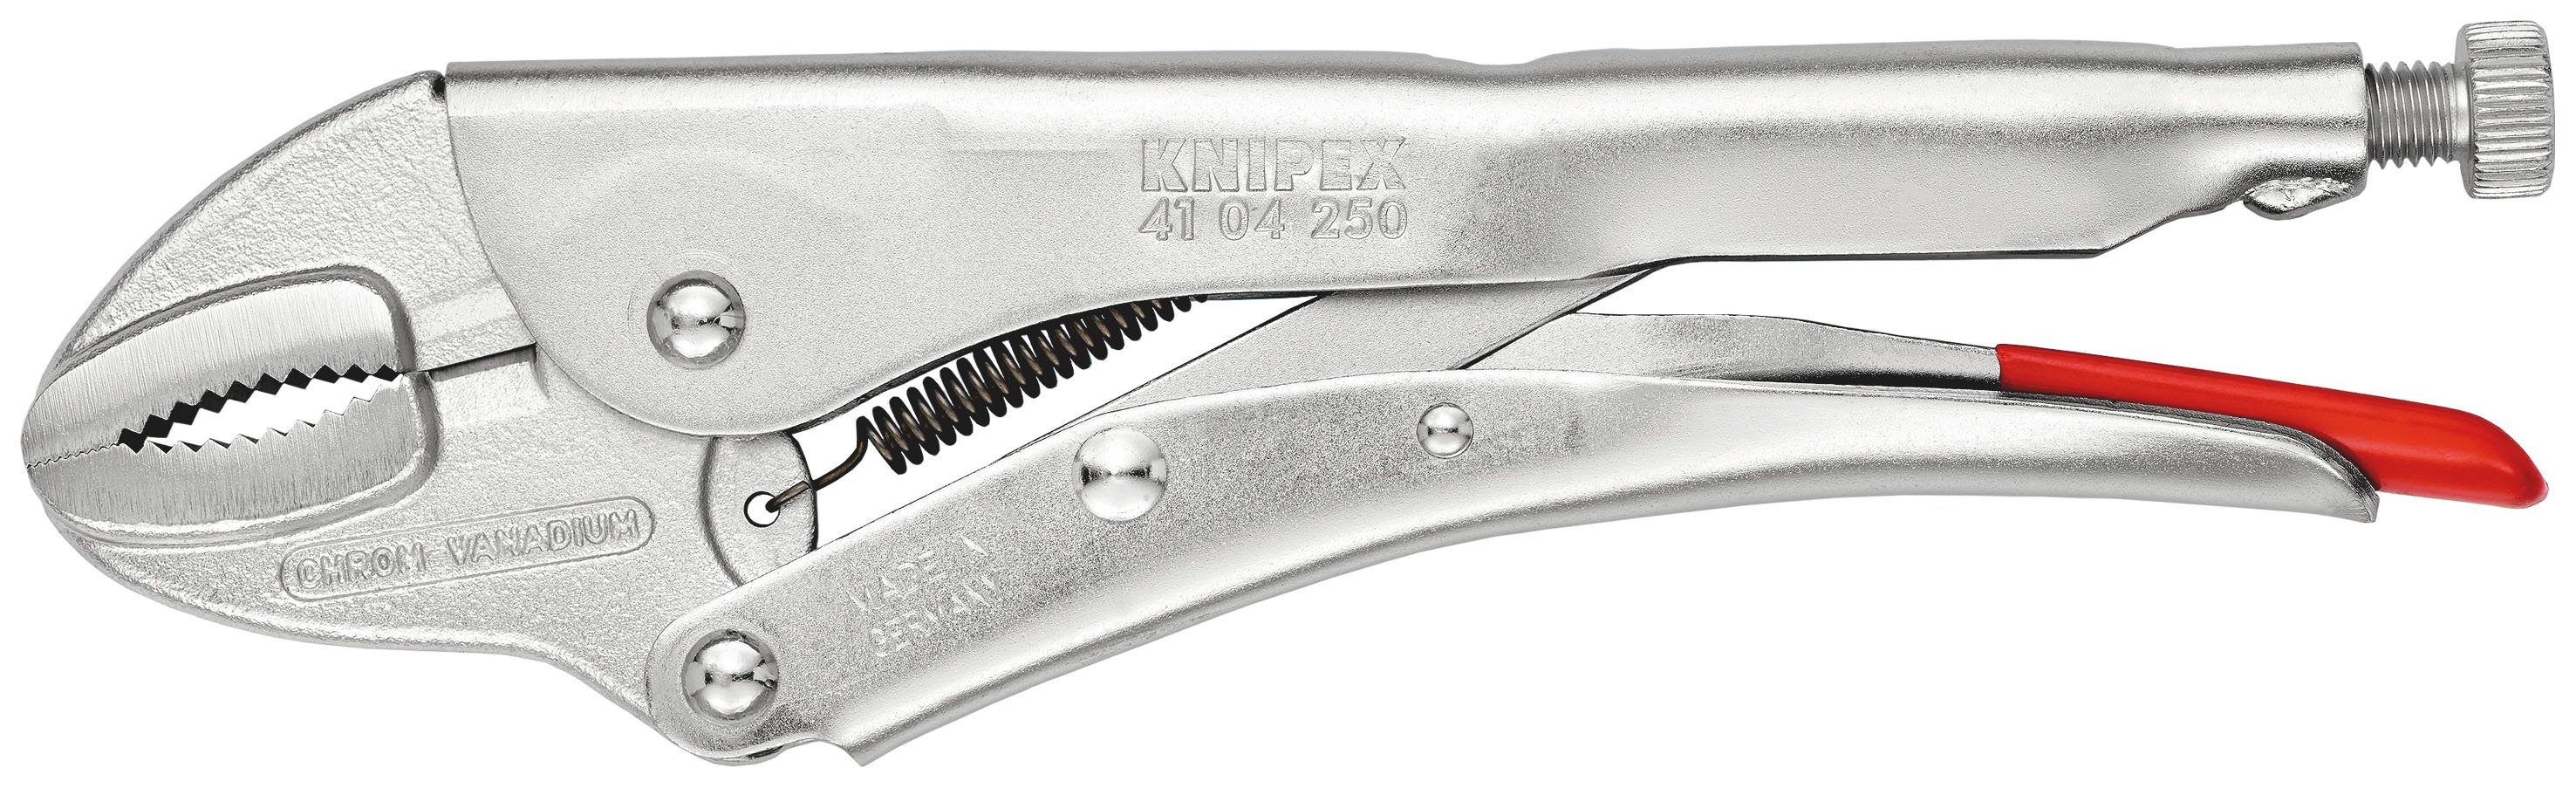 Knipex Gripzange 41 04 EAN, verzinkt 250 mm 250 1-tlg